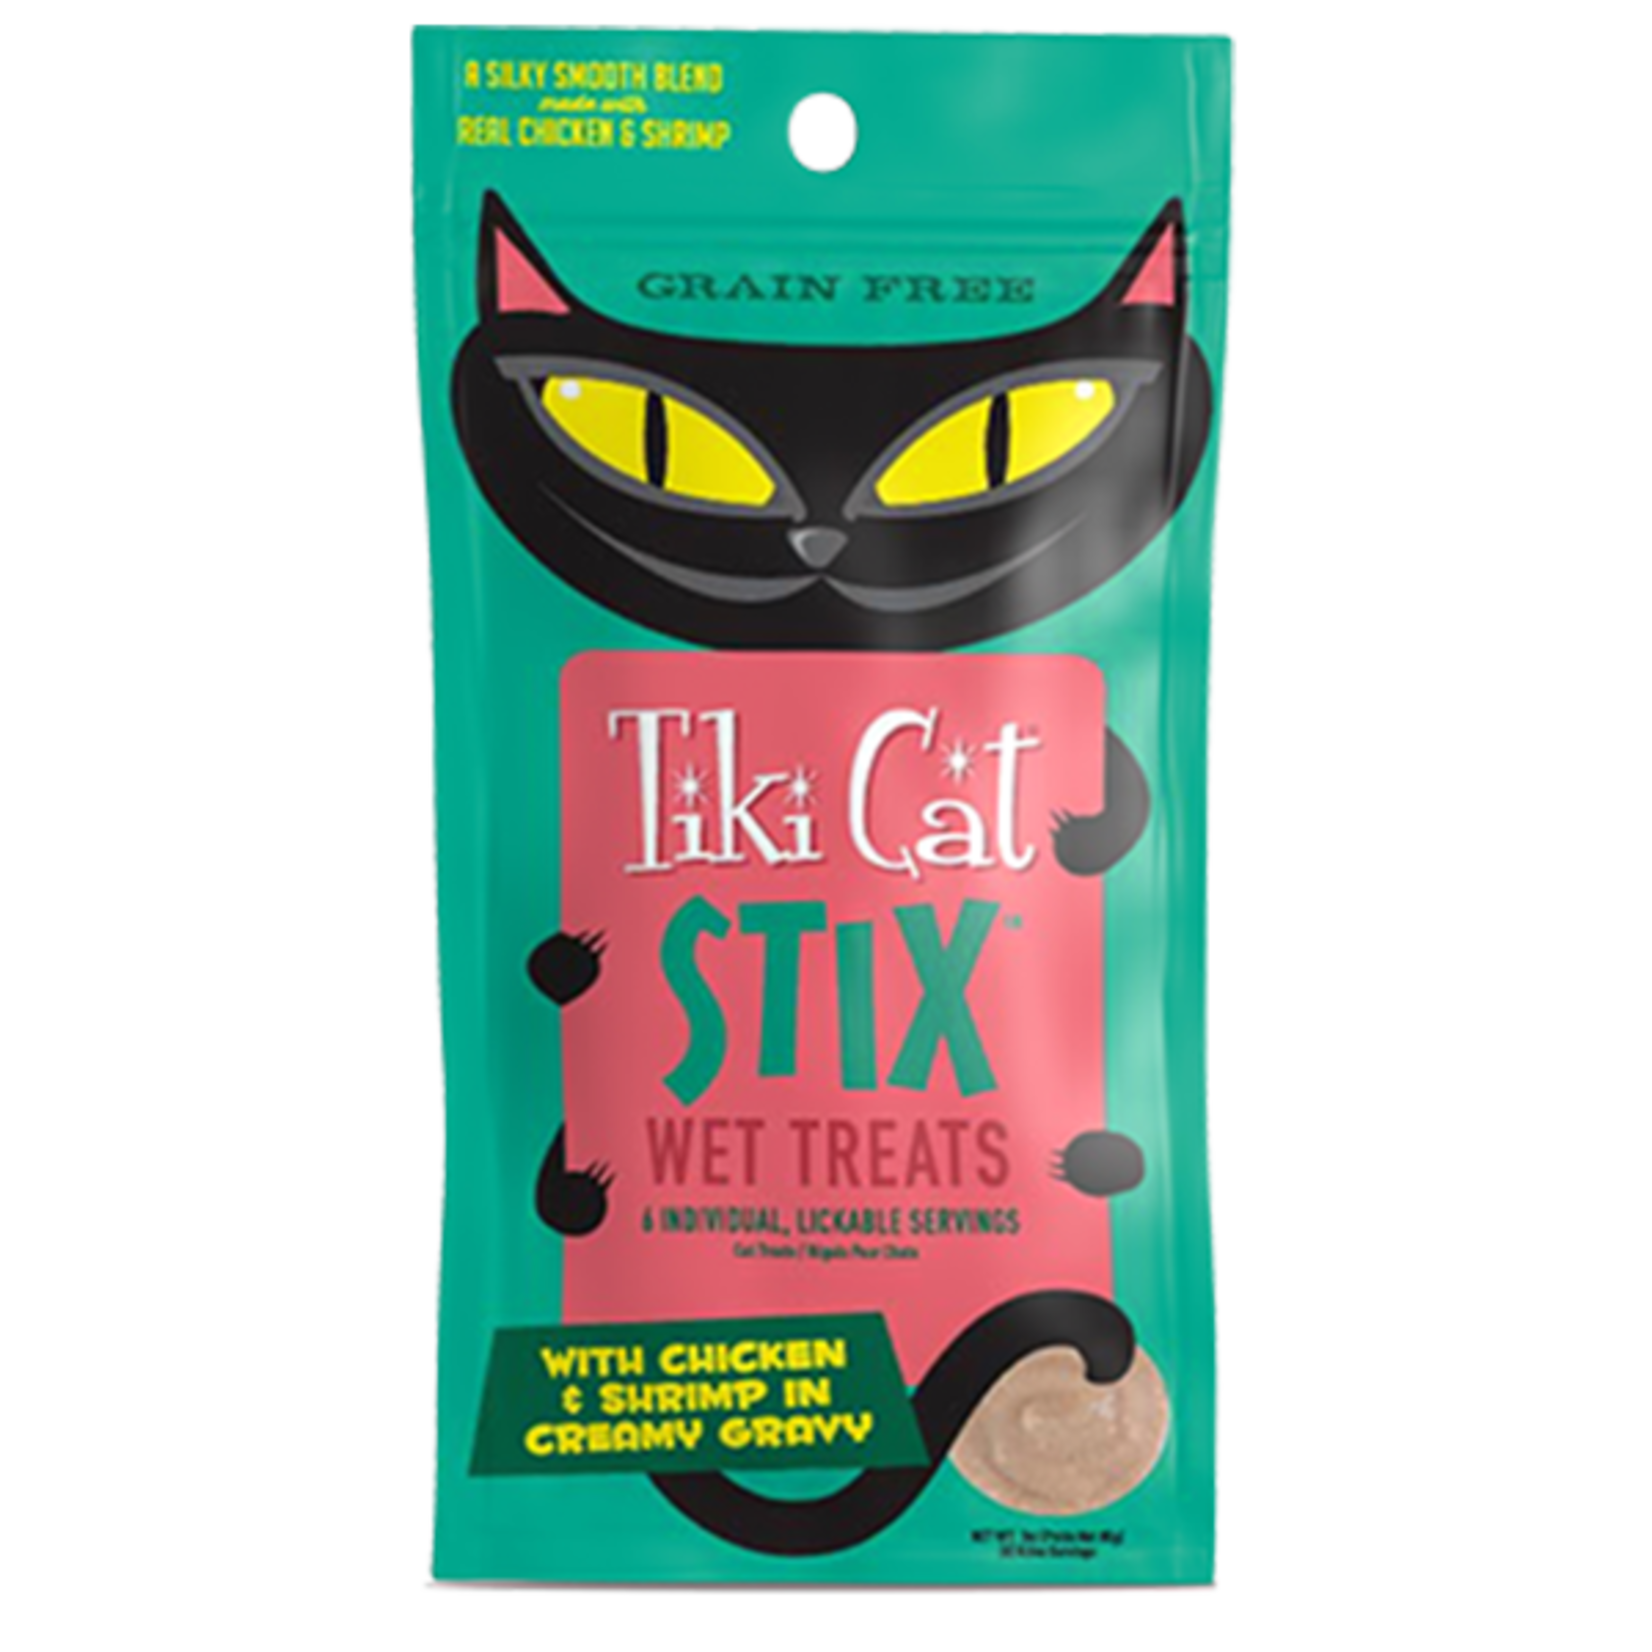 Tiki Pets Tiki Cat Stix Chicken & Shrimp 6 Pack